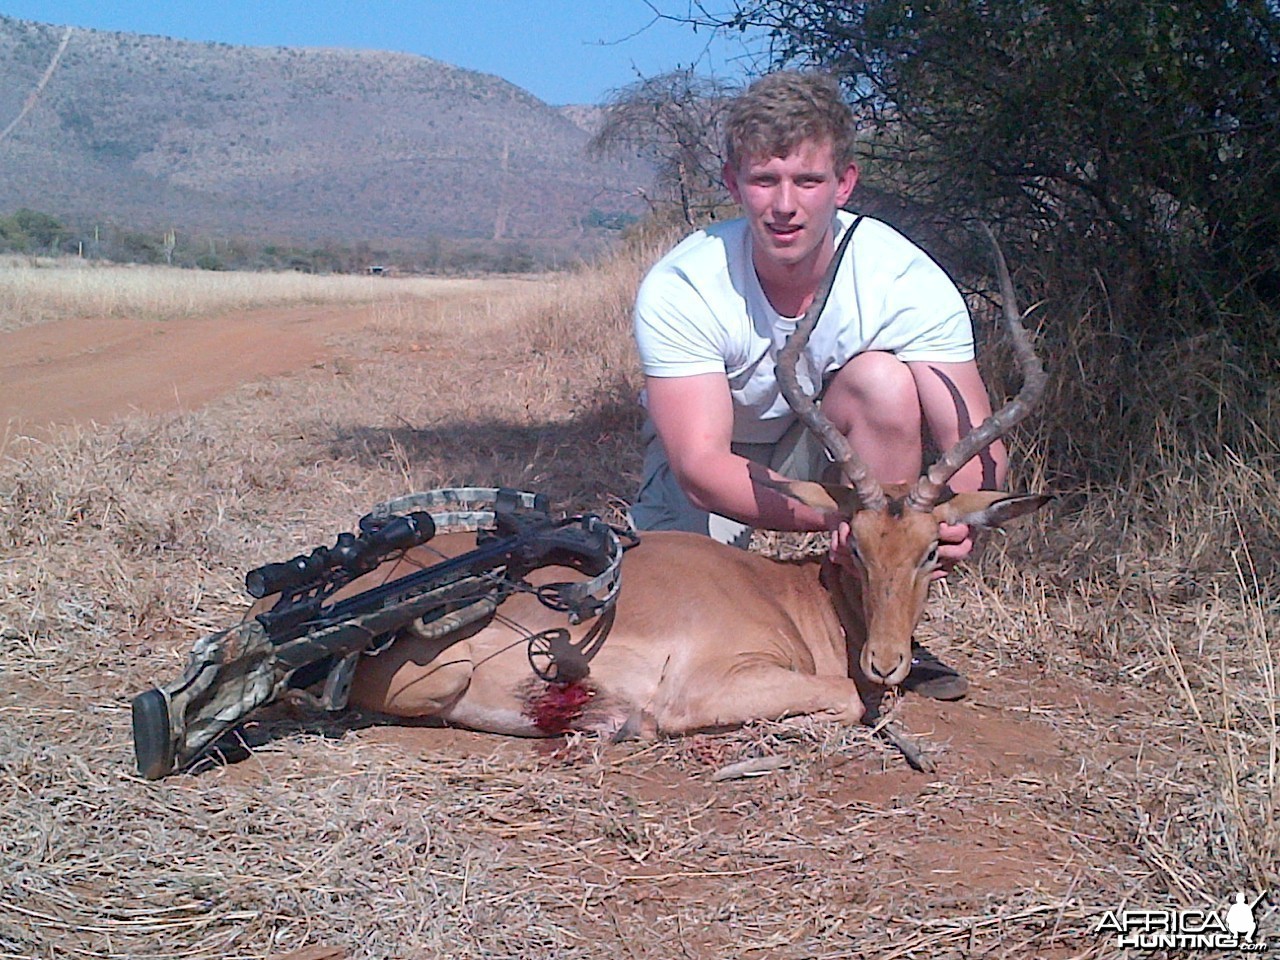 25 inch rowland ward impala taken with crossbow